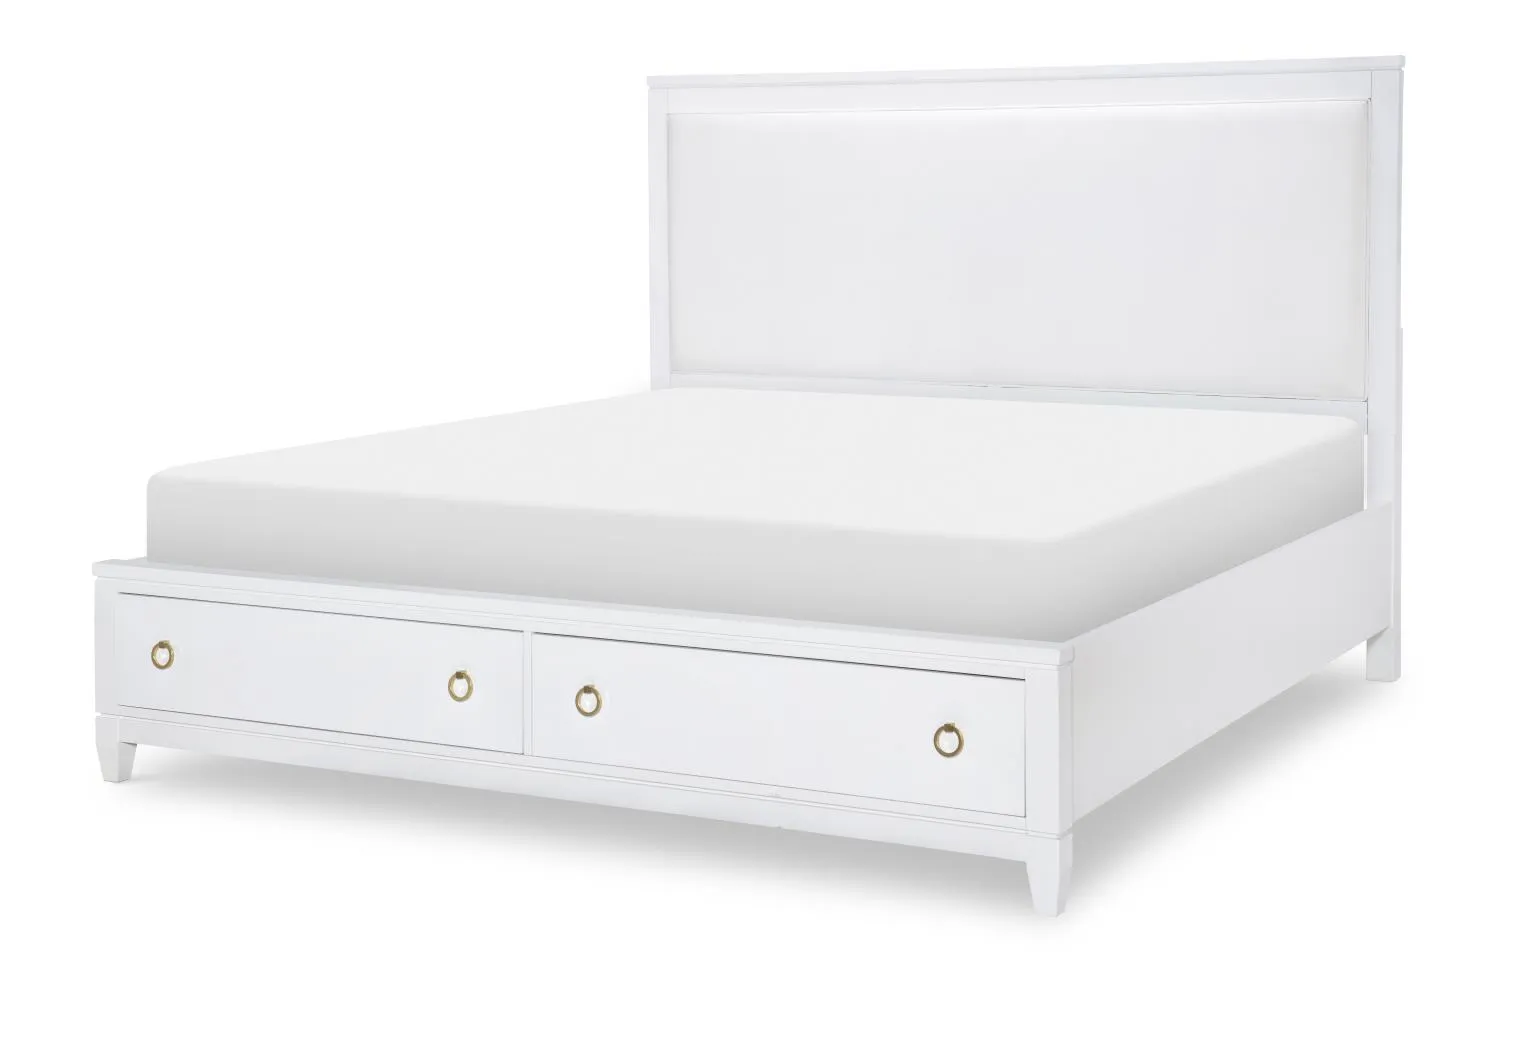 Summerland Upholstered King Bed w/ Storage